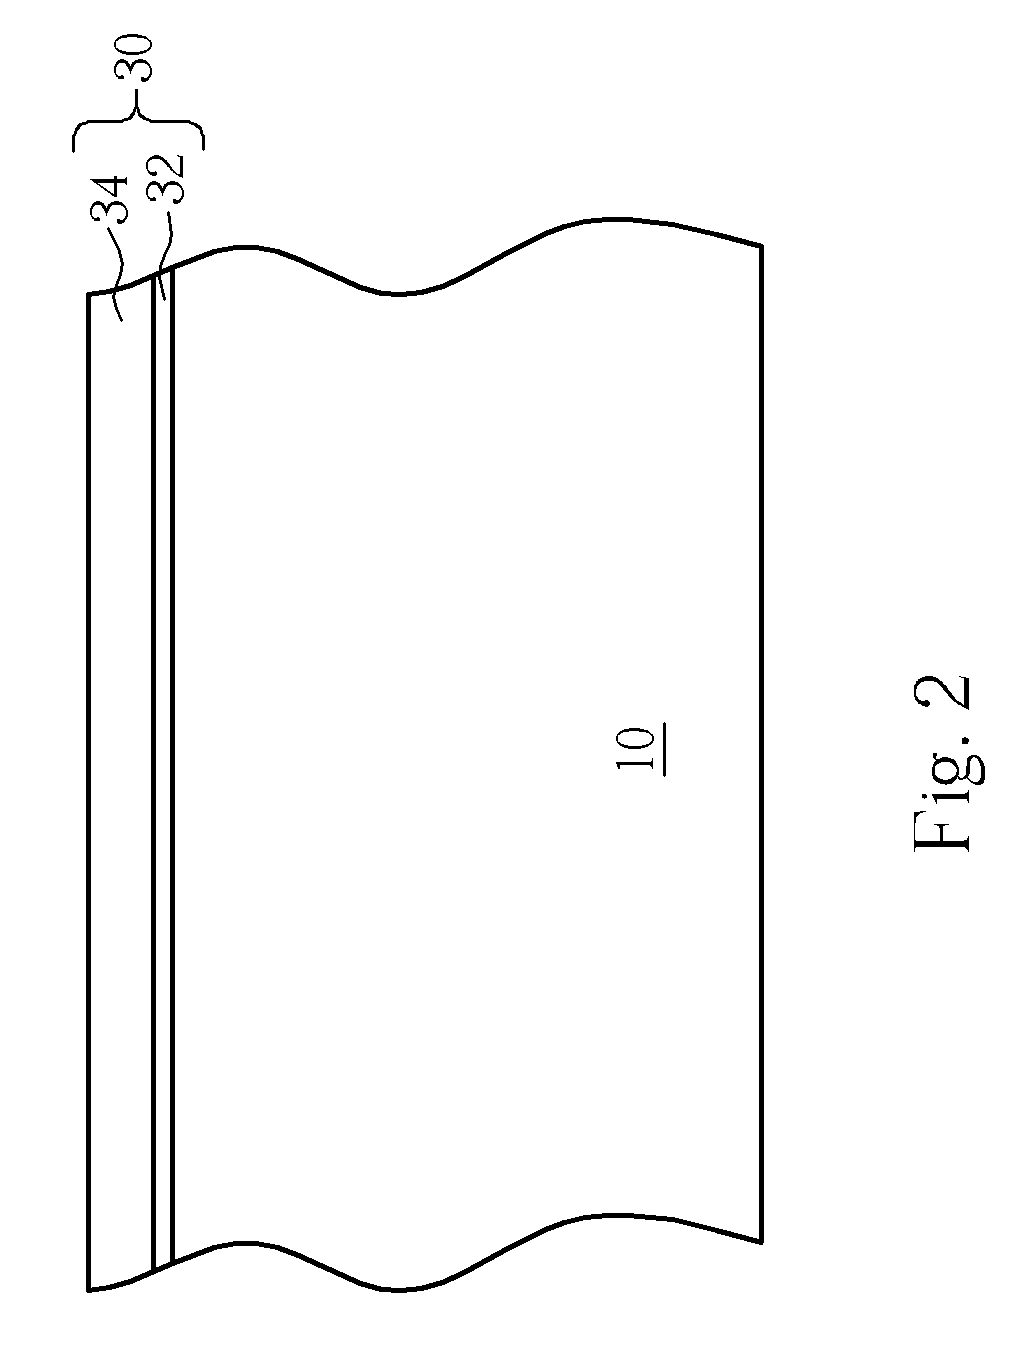 Seamless trench fill method utilizing sub-atmospheric pressure chemical vapor deposition technique